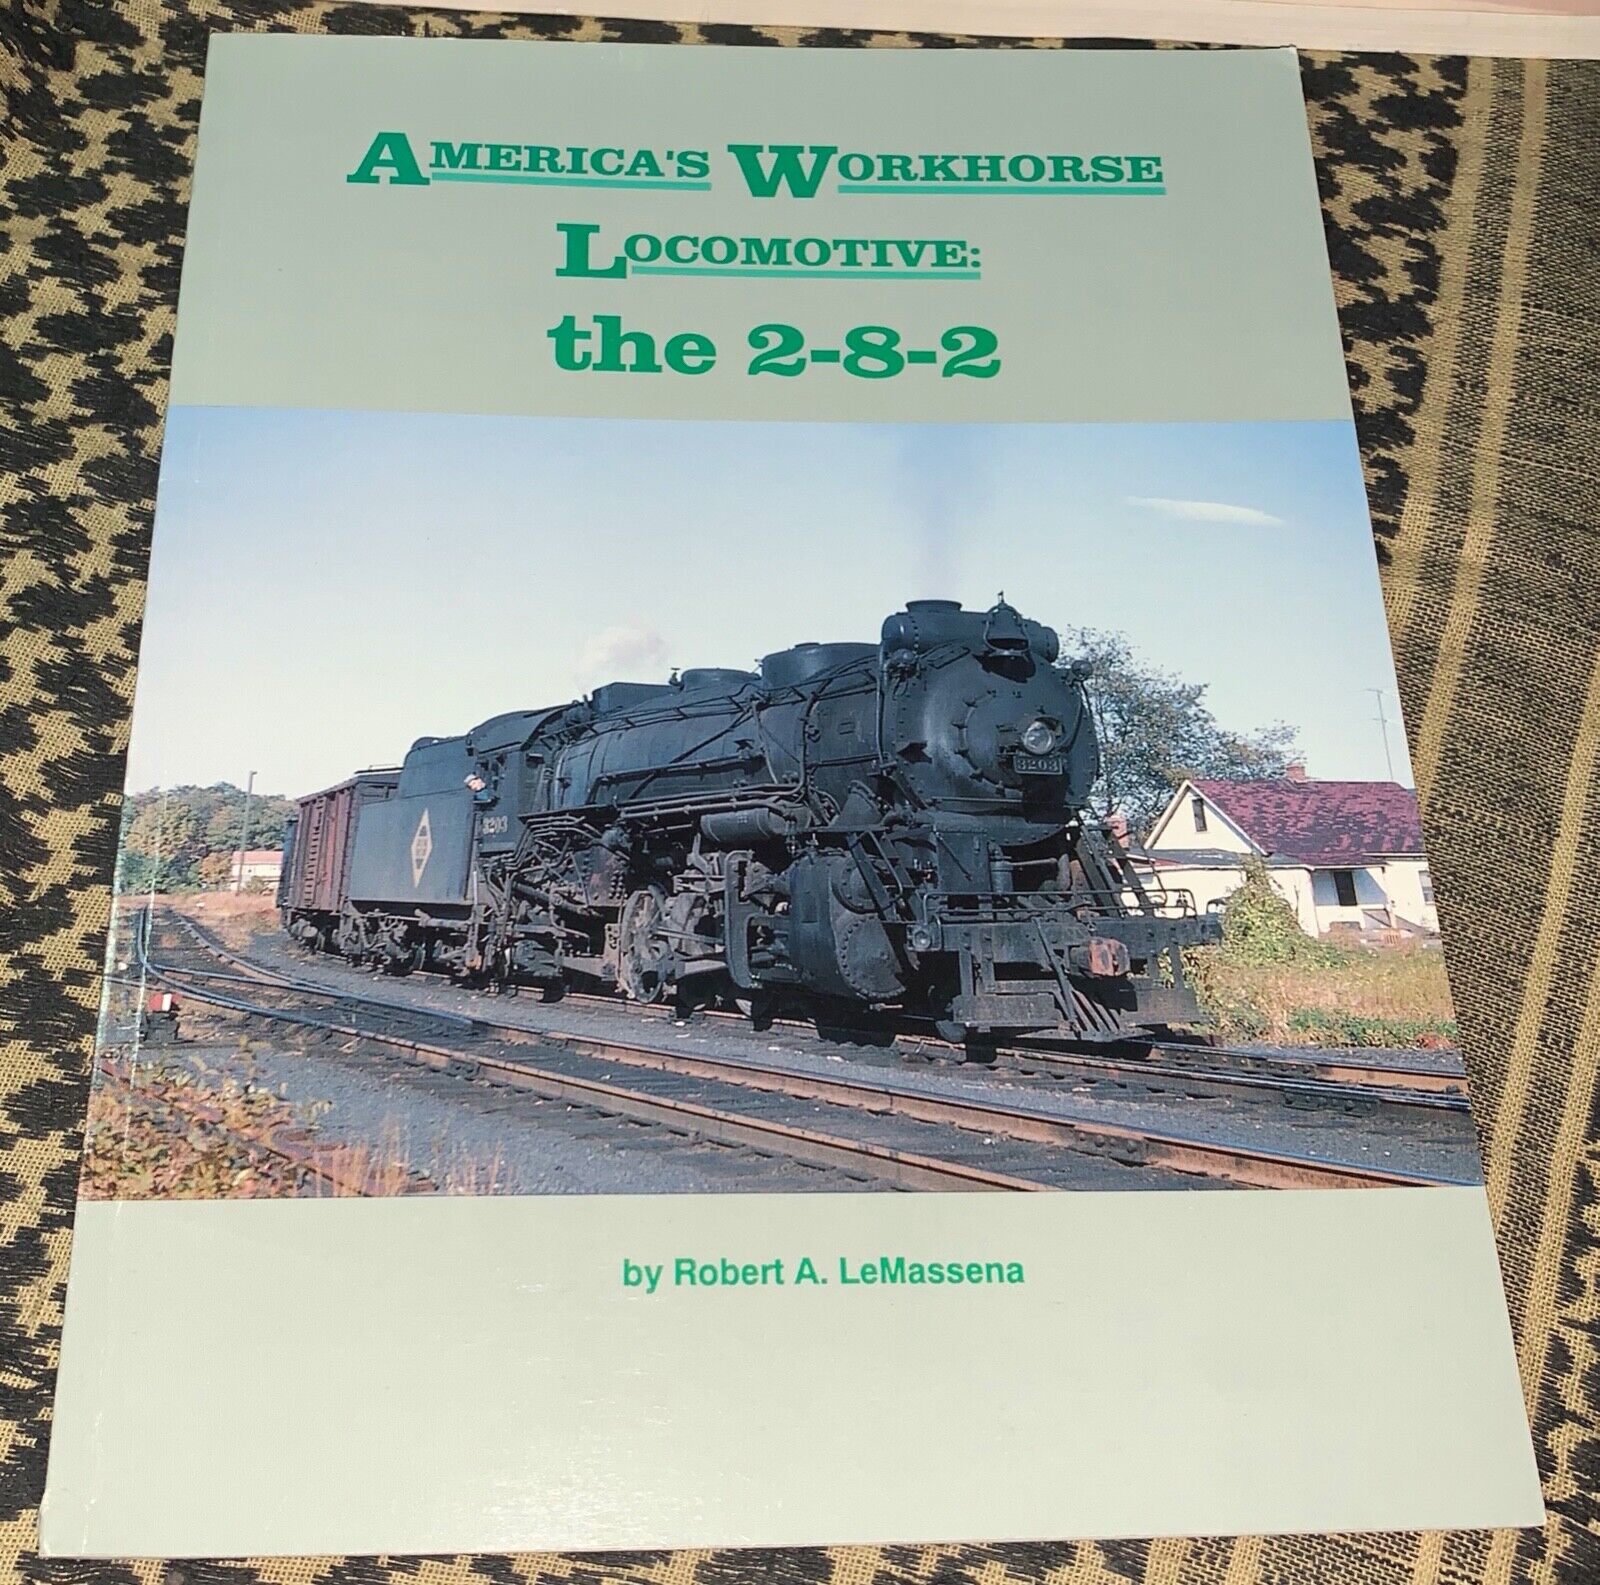 America's Workhorse Locomotive: the 2-8-2 by Robert A. LeMassena